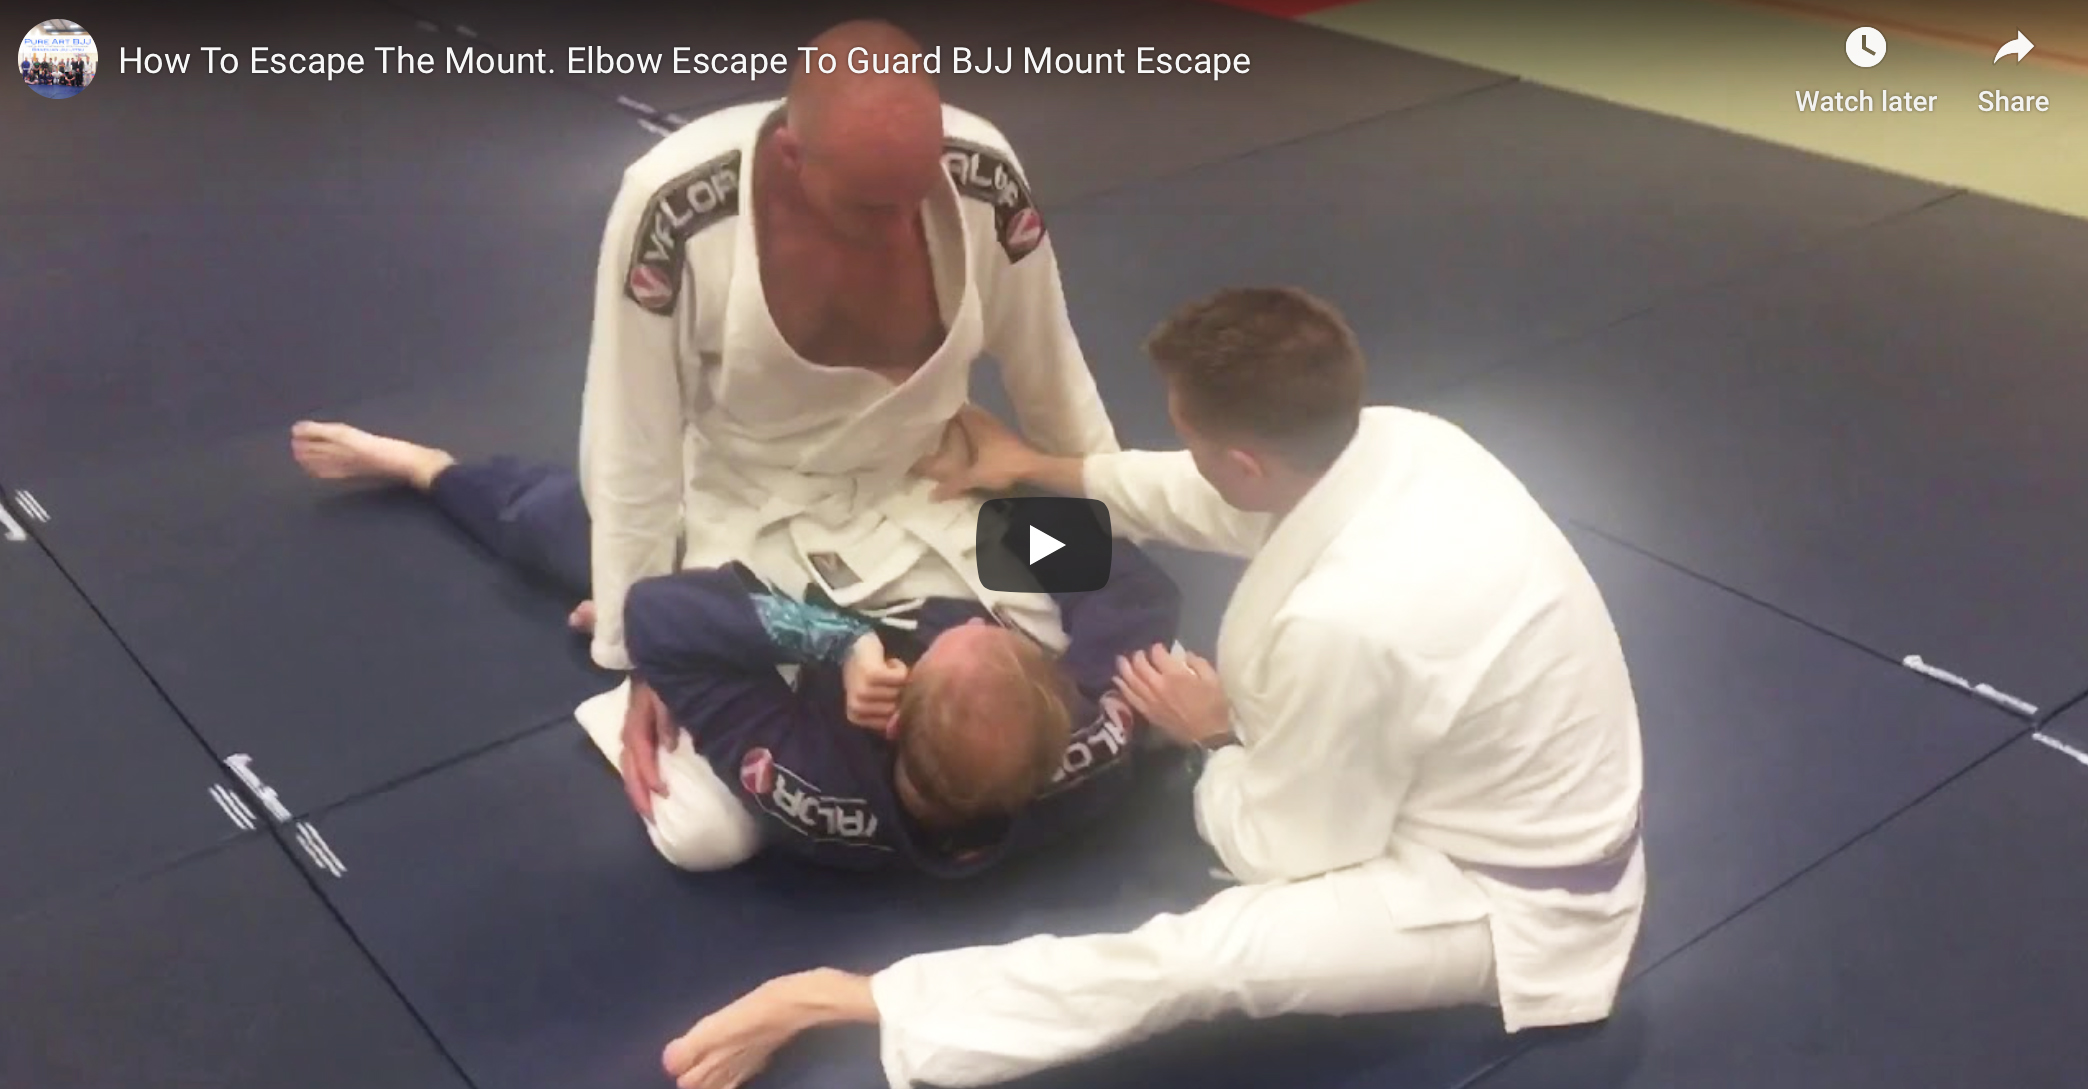 How To Escape The Mount. Elbow Escape